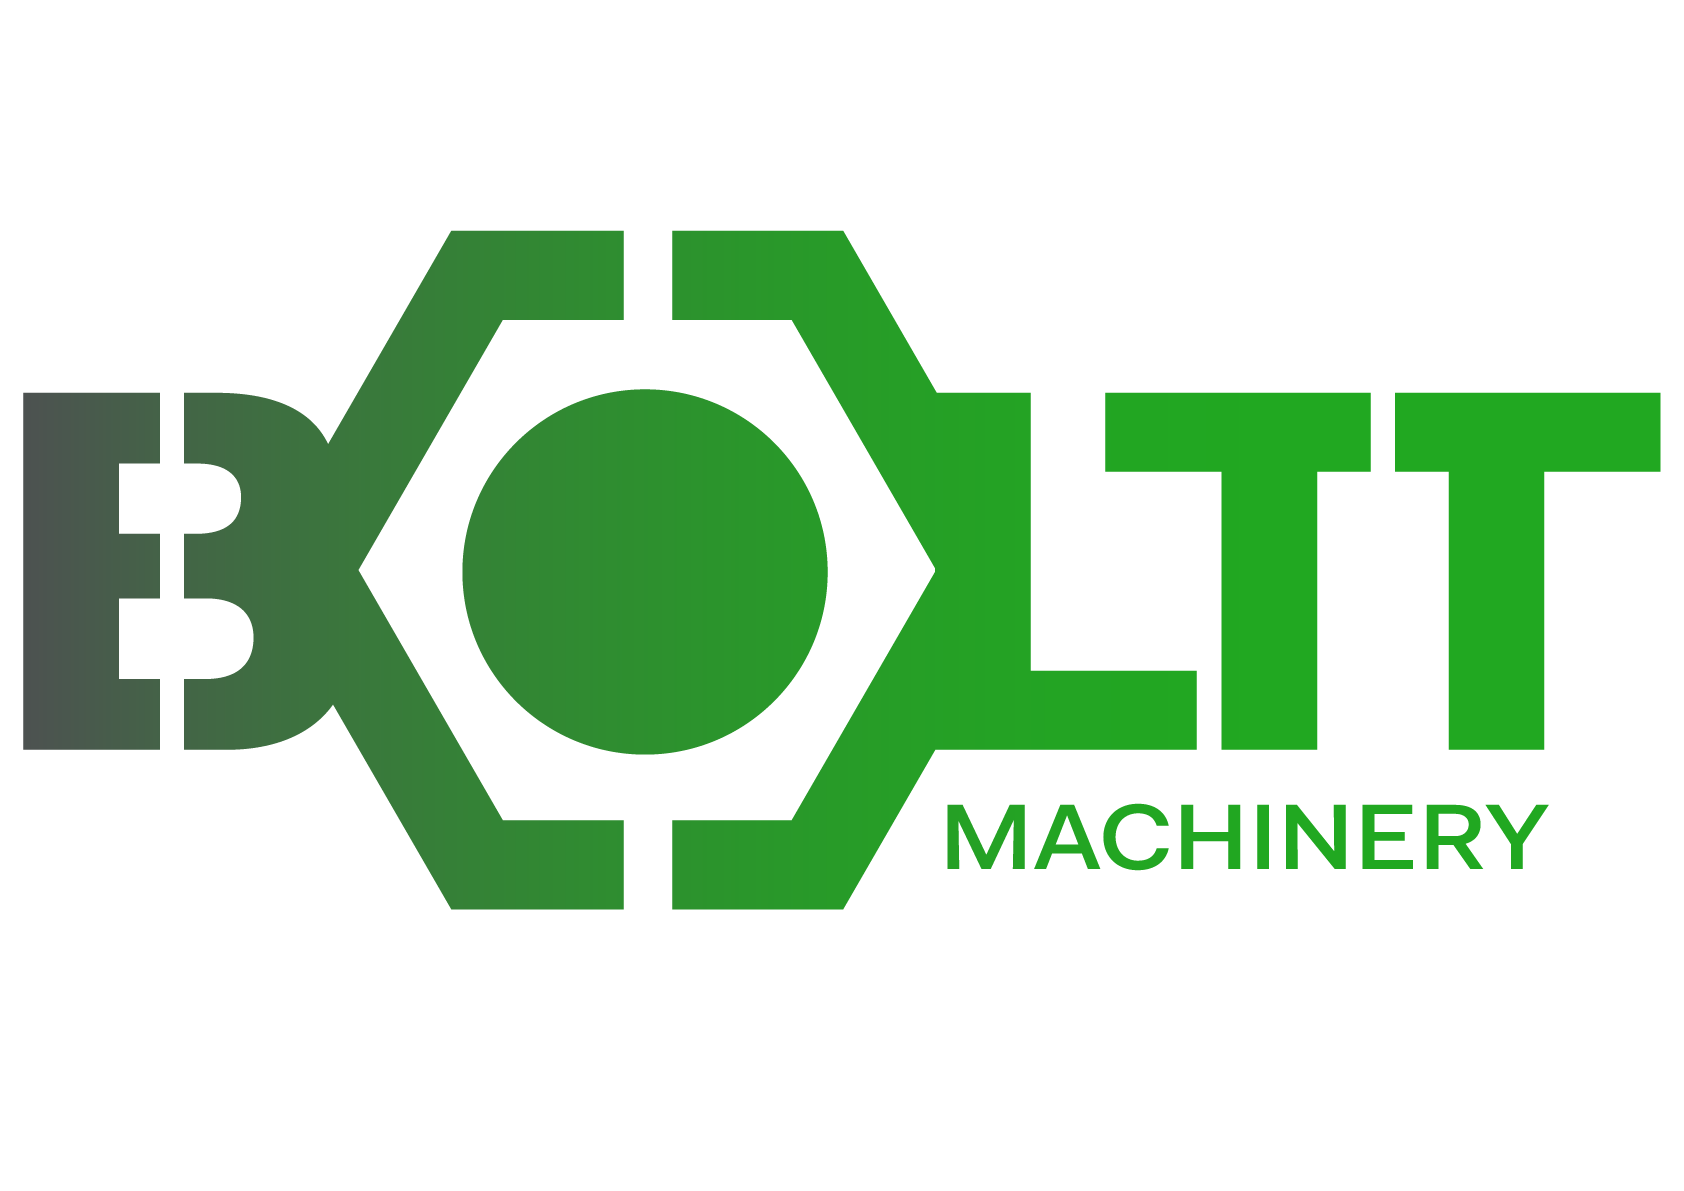 Boltt Machinery